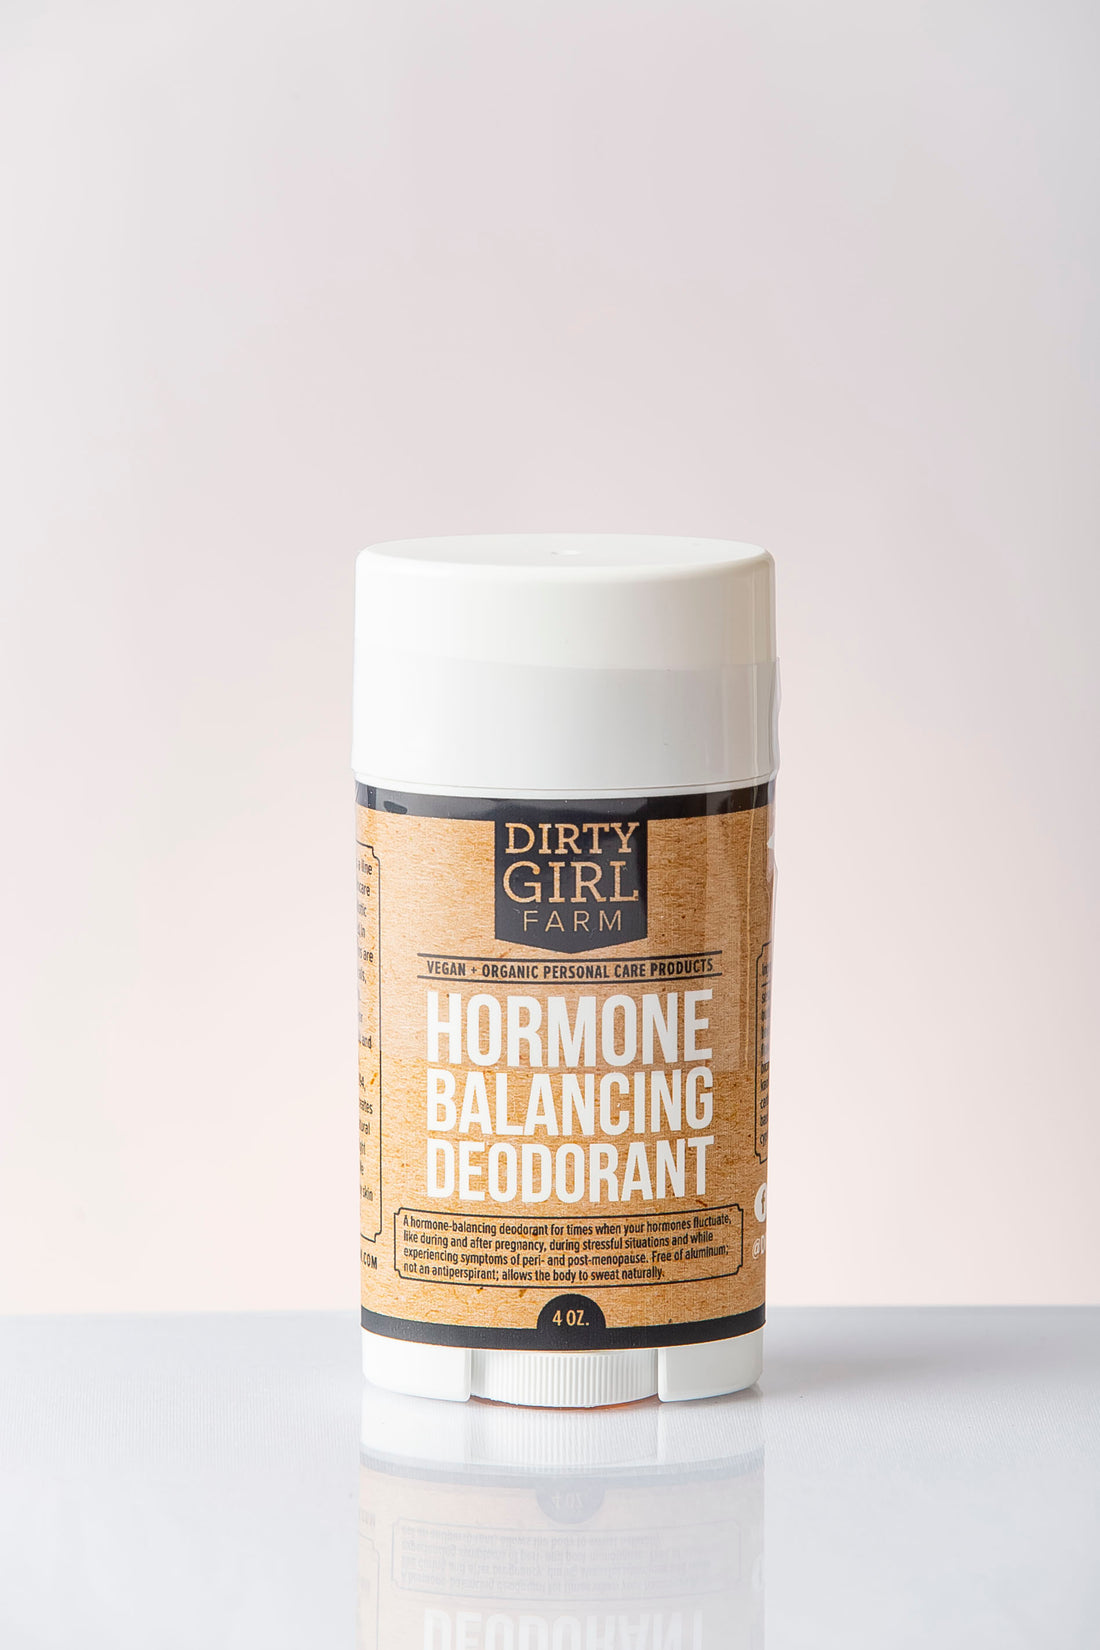 Dirty Girl Farm Hormone Balancing Deodorant